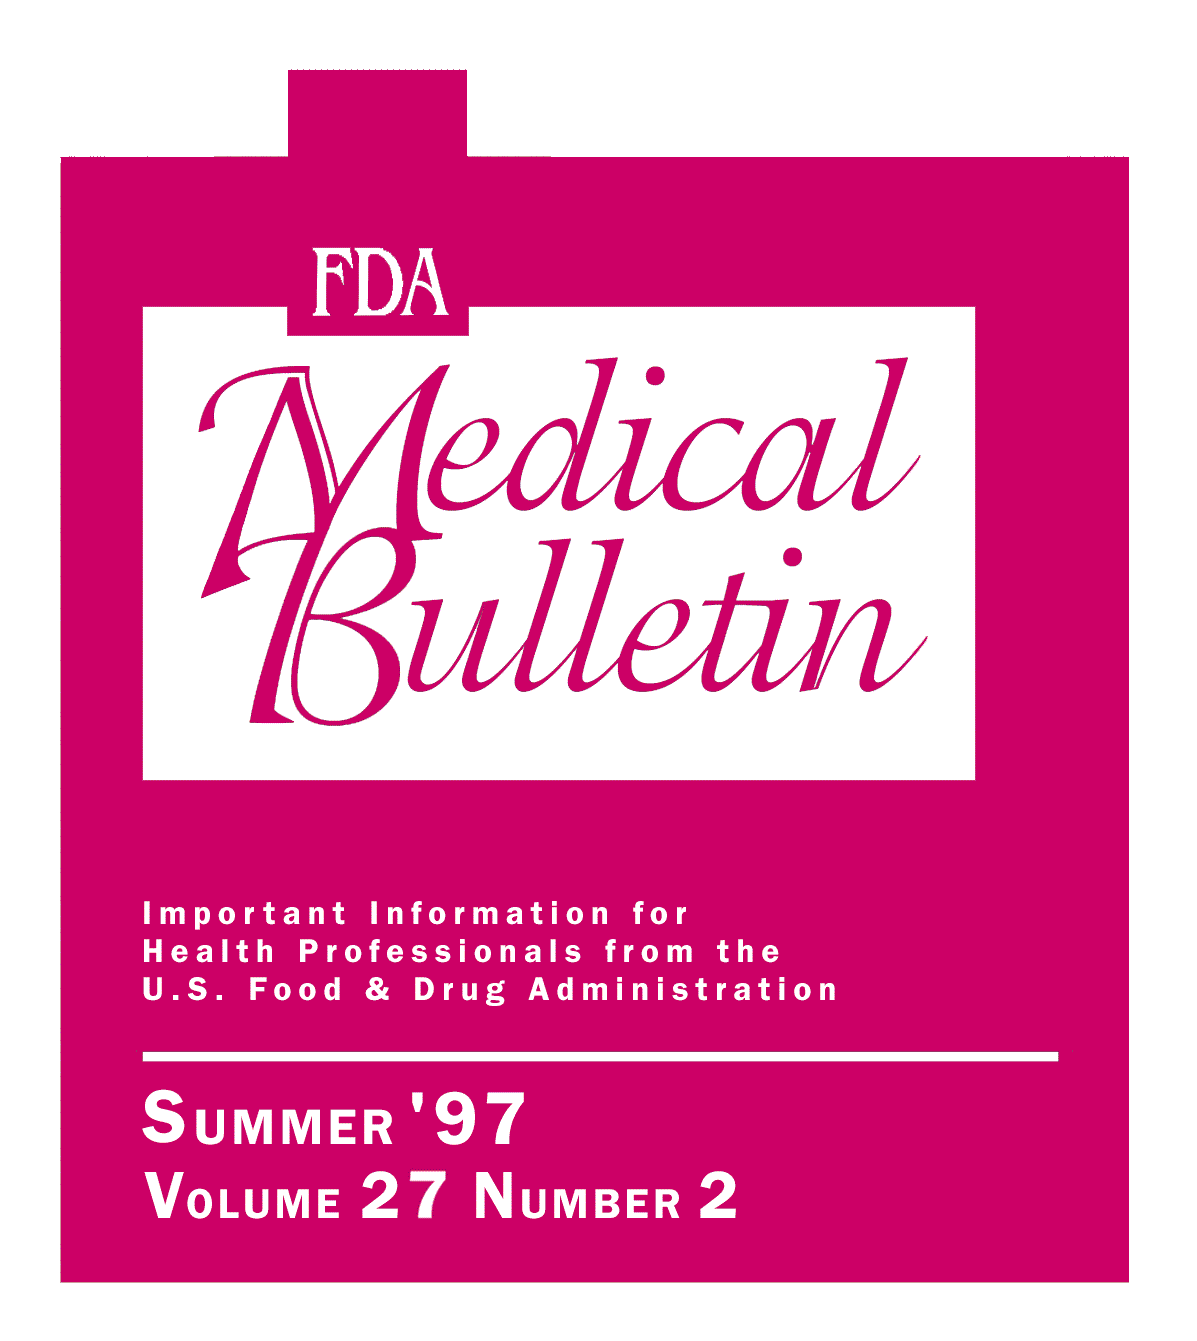 [FDA Medical
Bulletin]